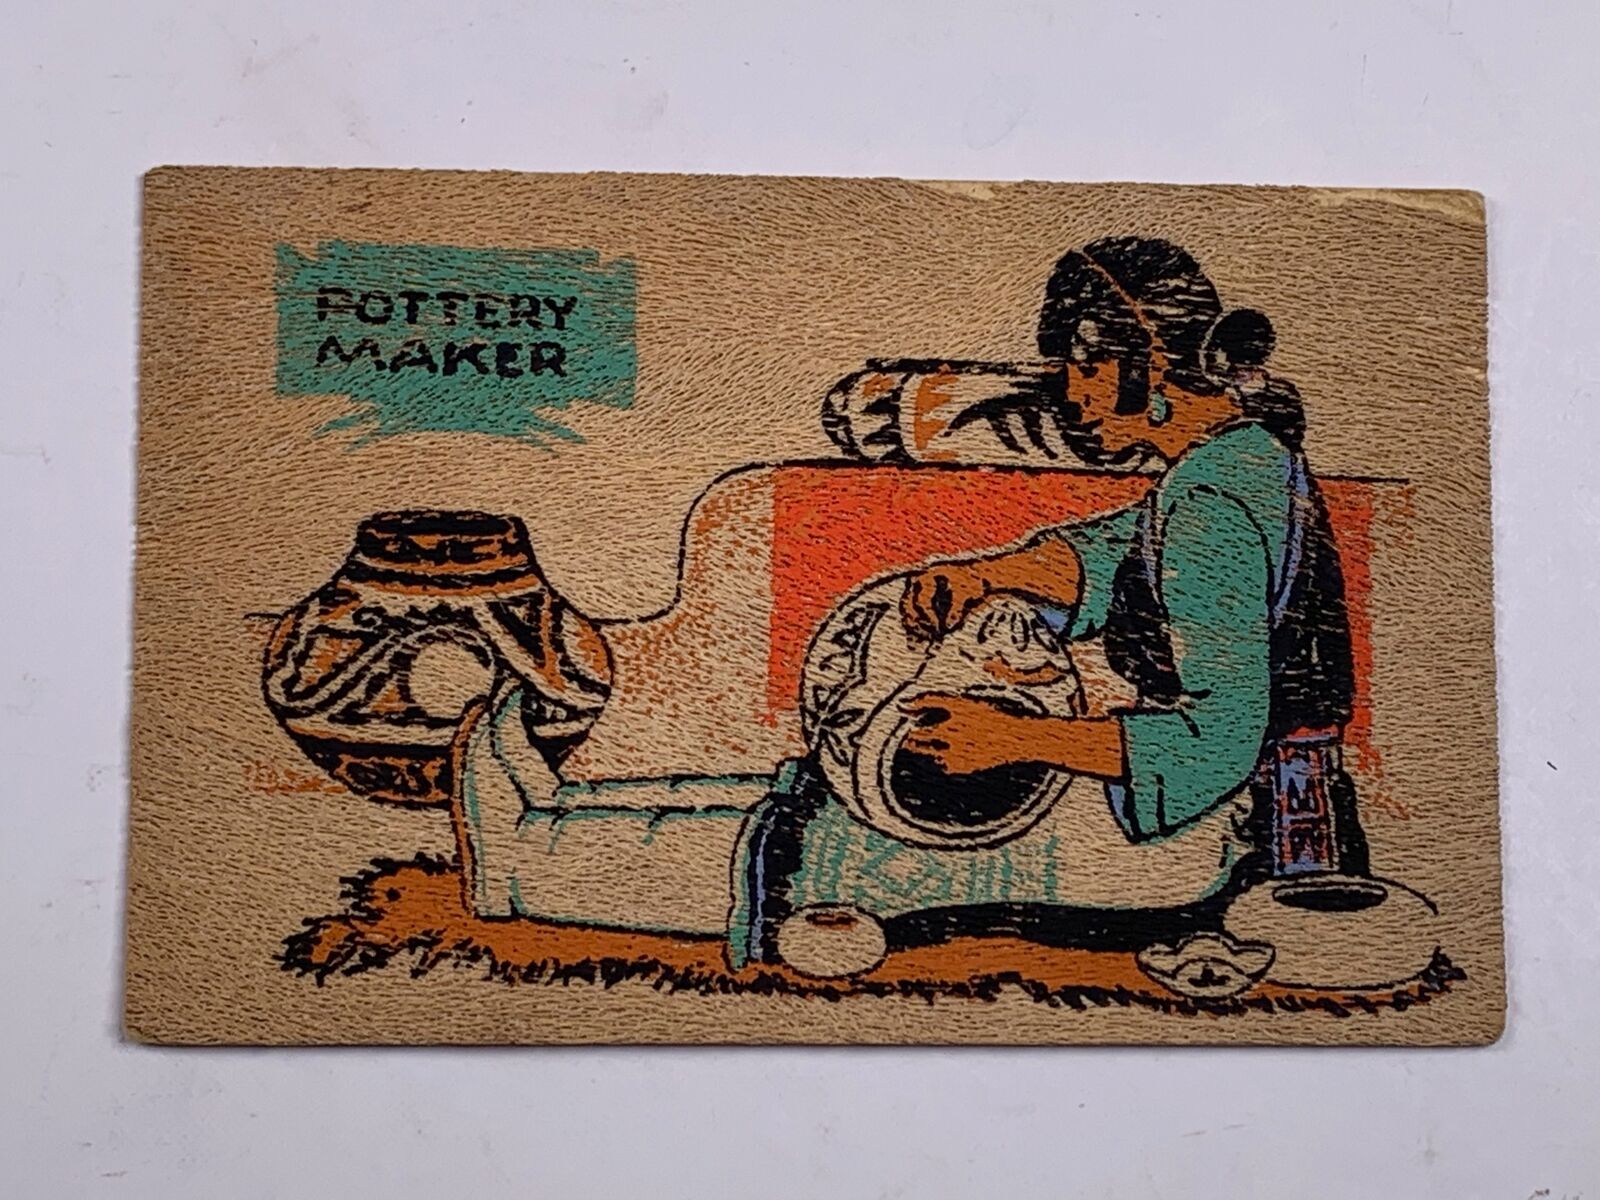 Native American Postcard Pottery Maker 1945